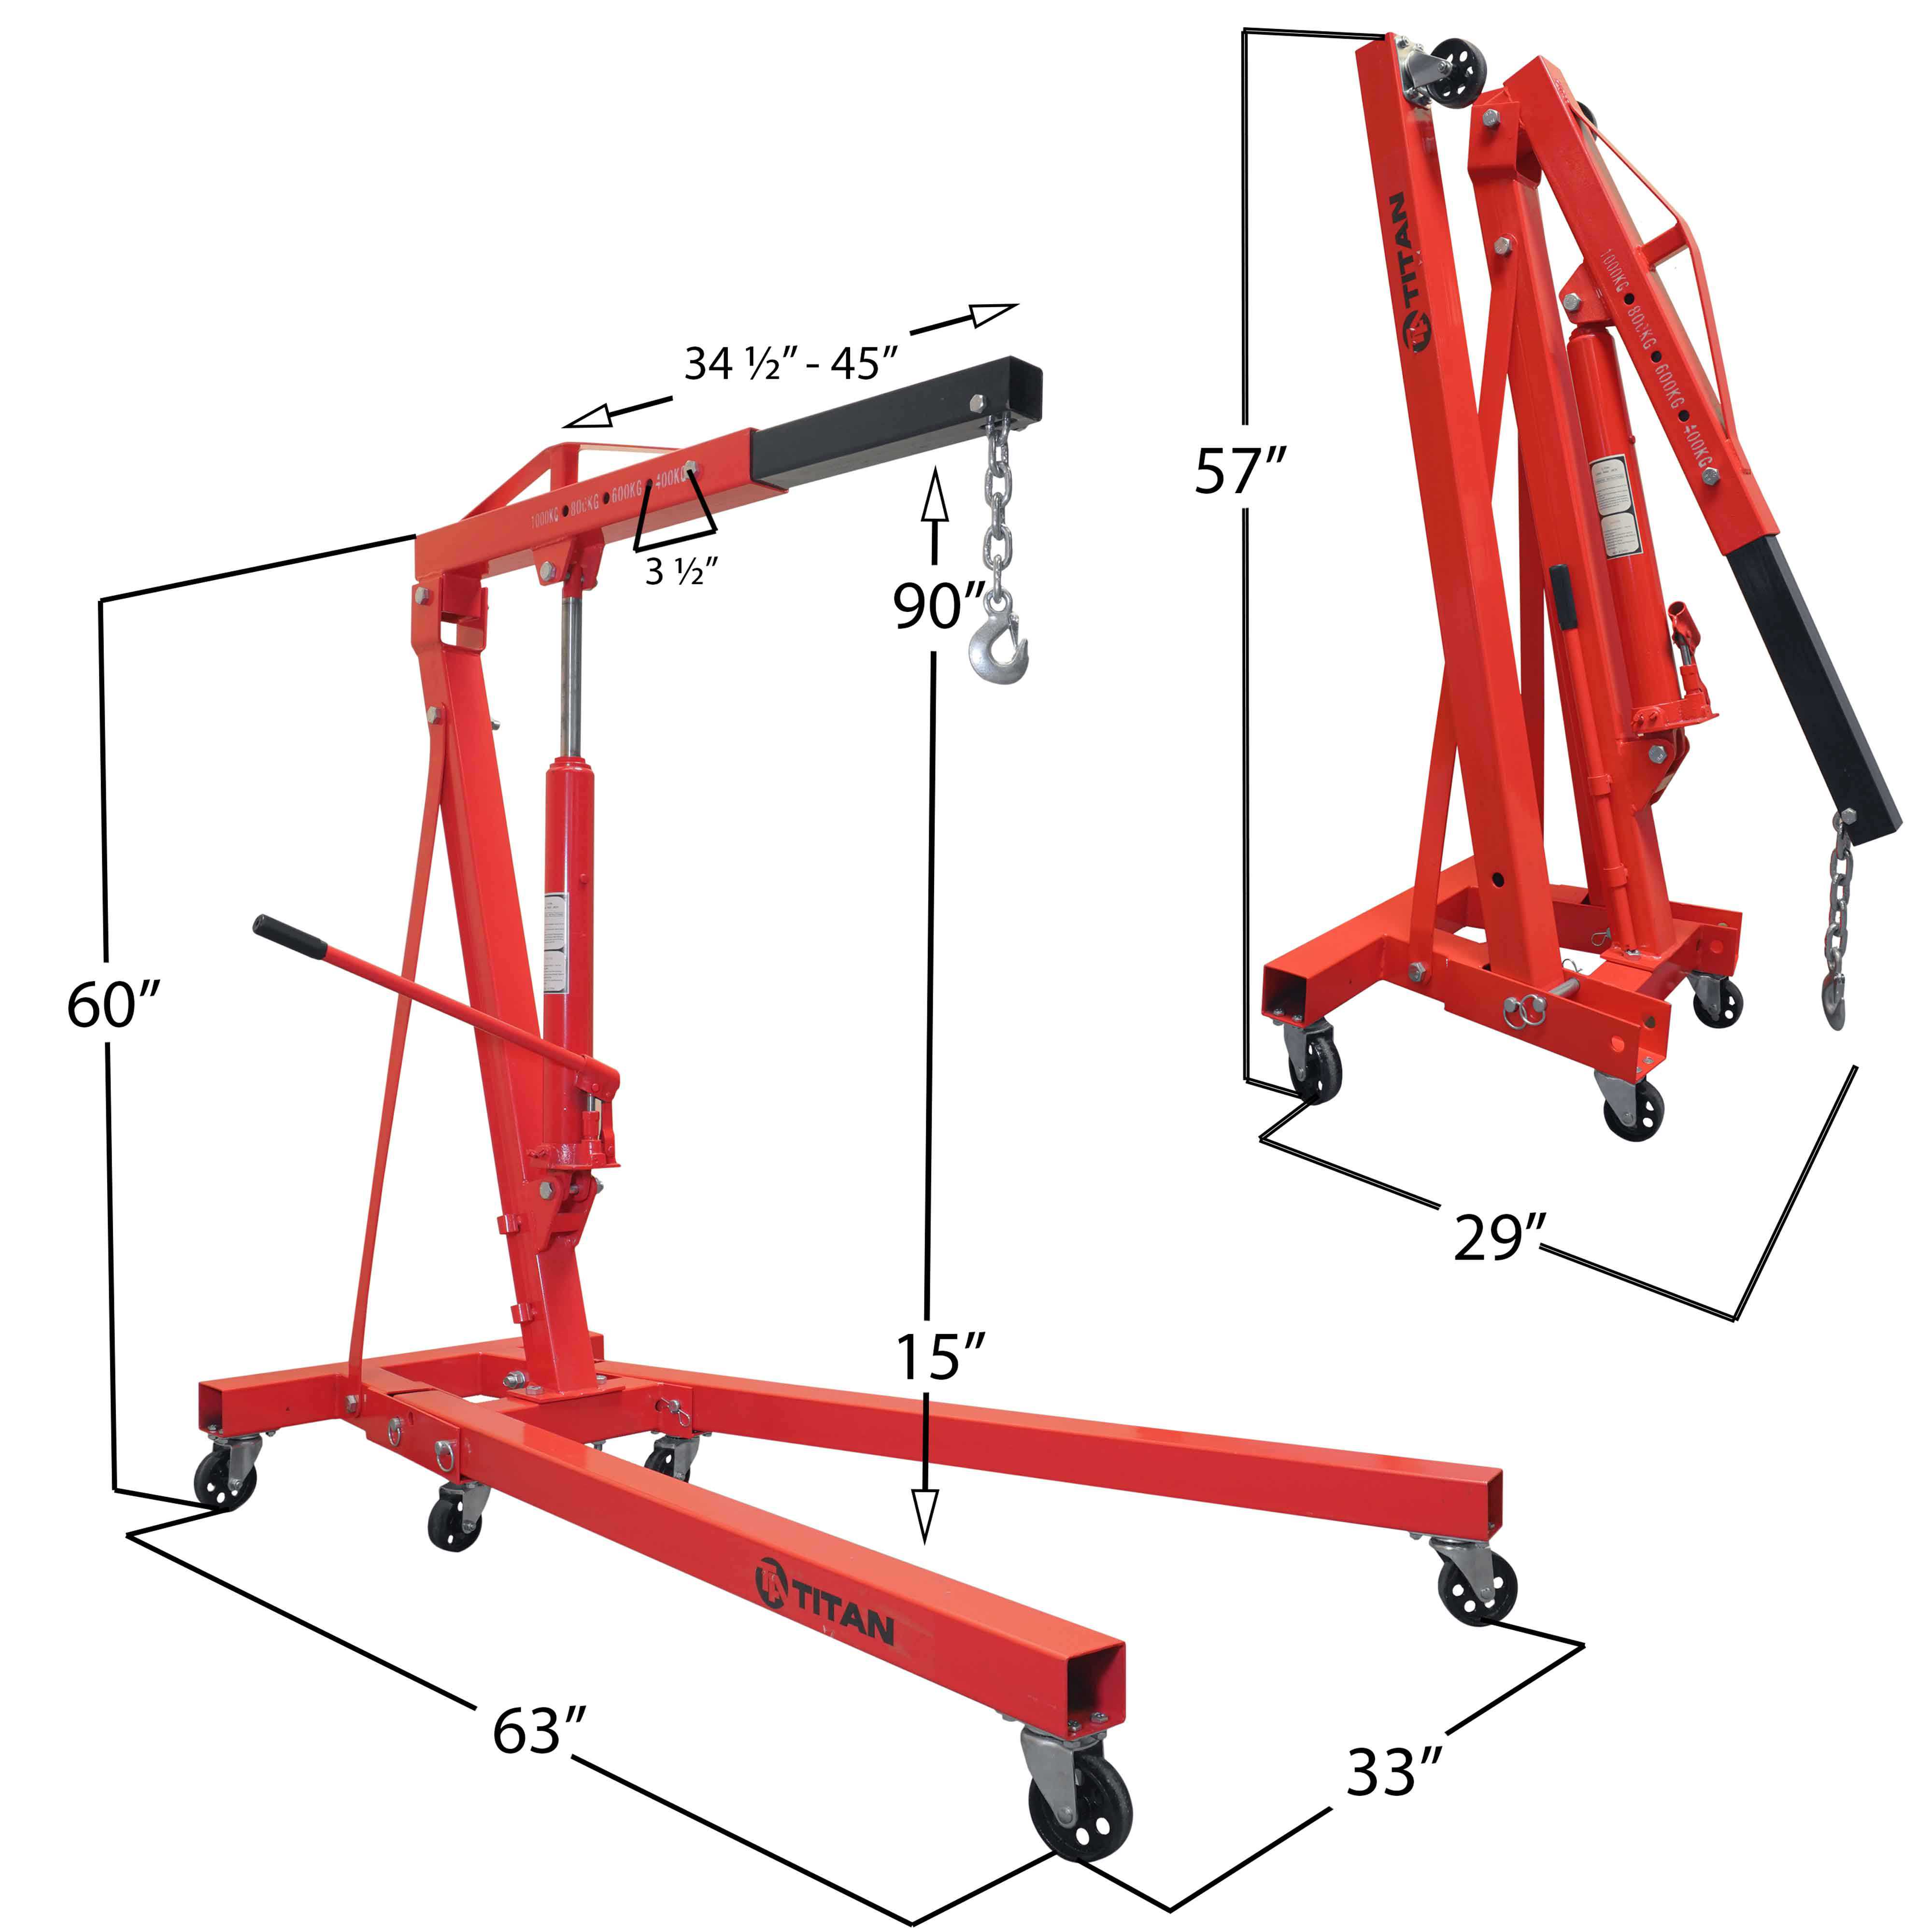 Titan Attachments 1 Ton Steel Shop Crane Adjustable Height Cherry Picker Lift